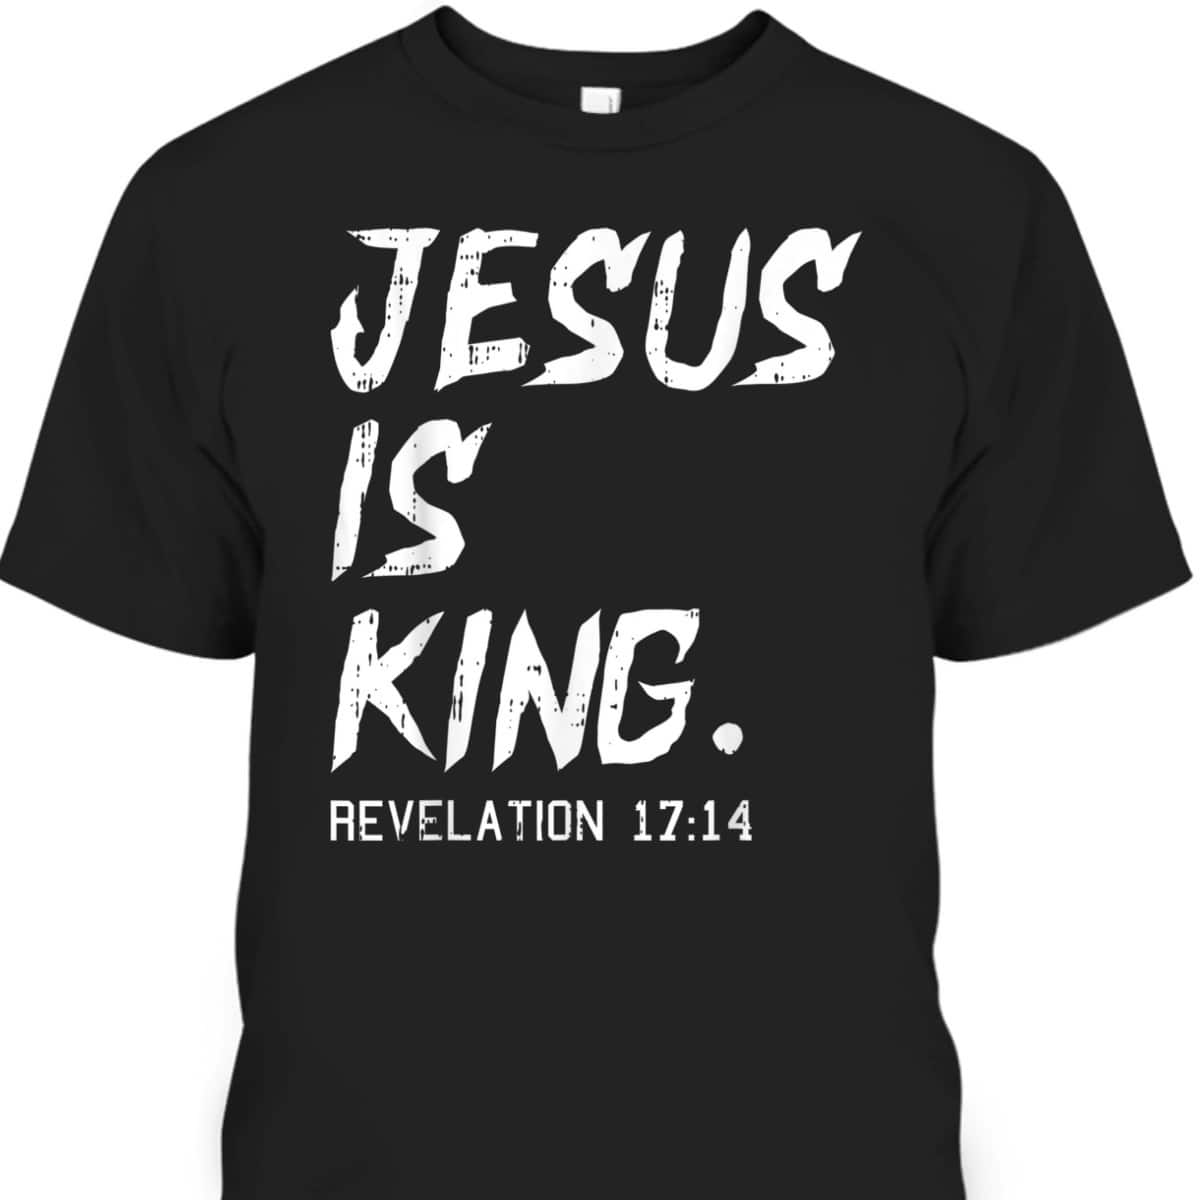 Jesus Is King Bible Verse T-Shirt Revelation 17:14 Revelation Bible Religious Christian